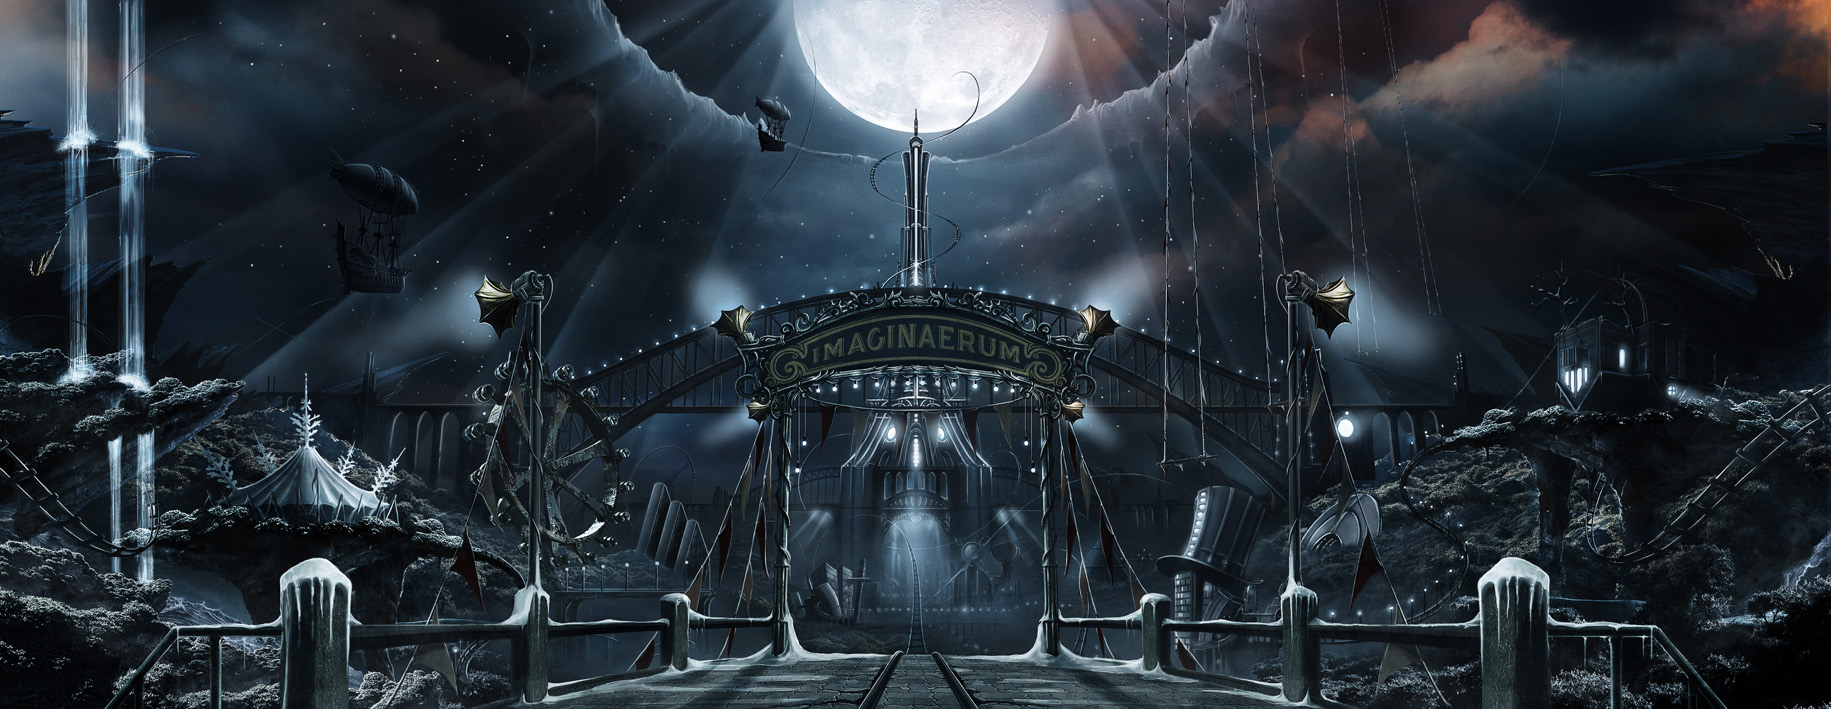 Nightwish Imaginaerum Release Date Nuclear Blast